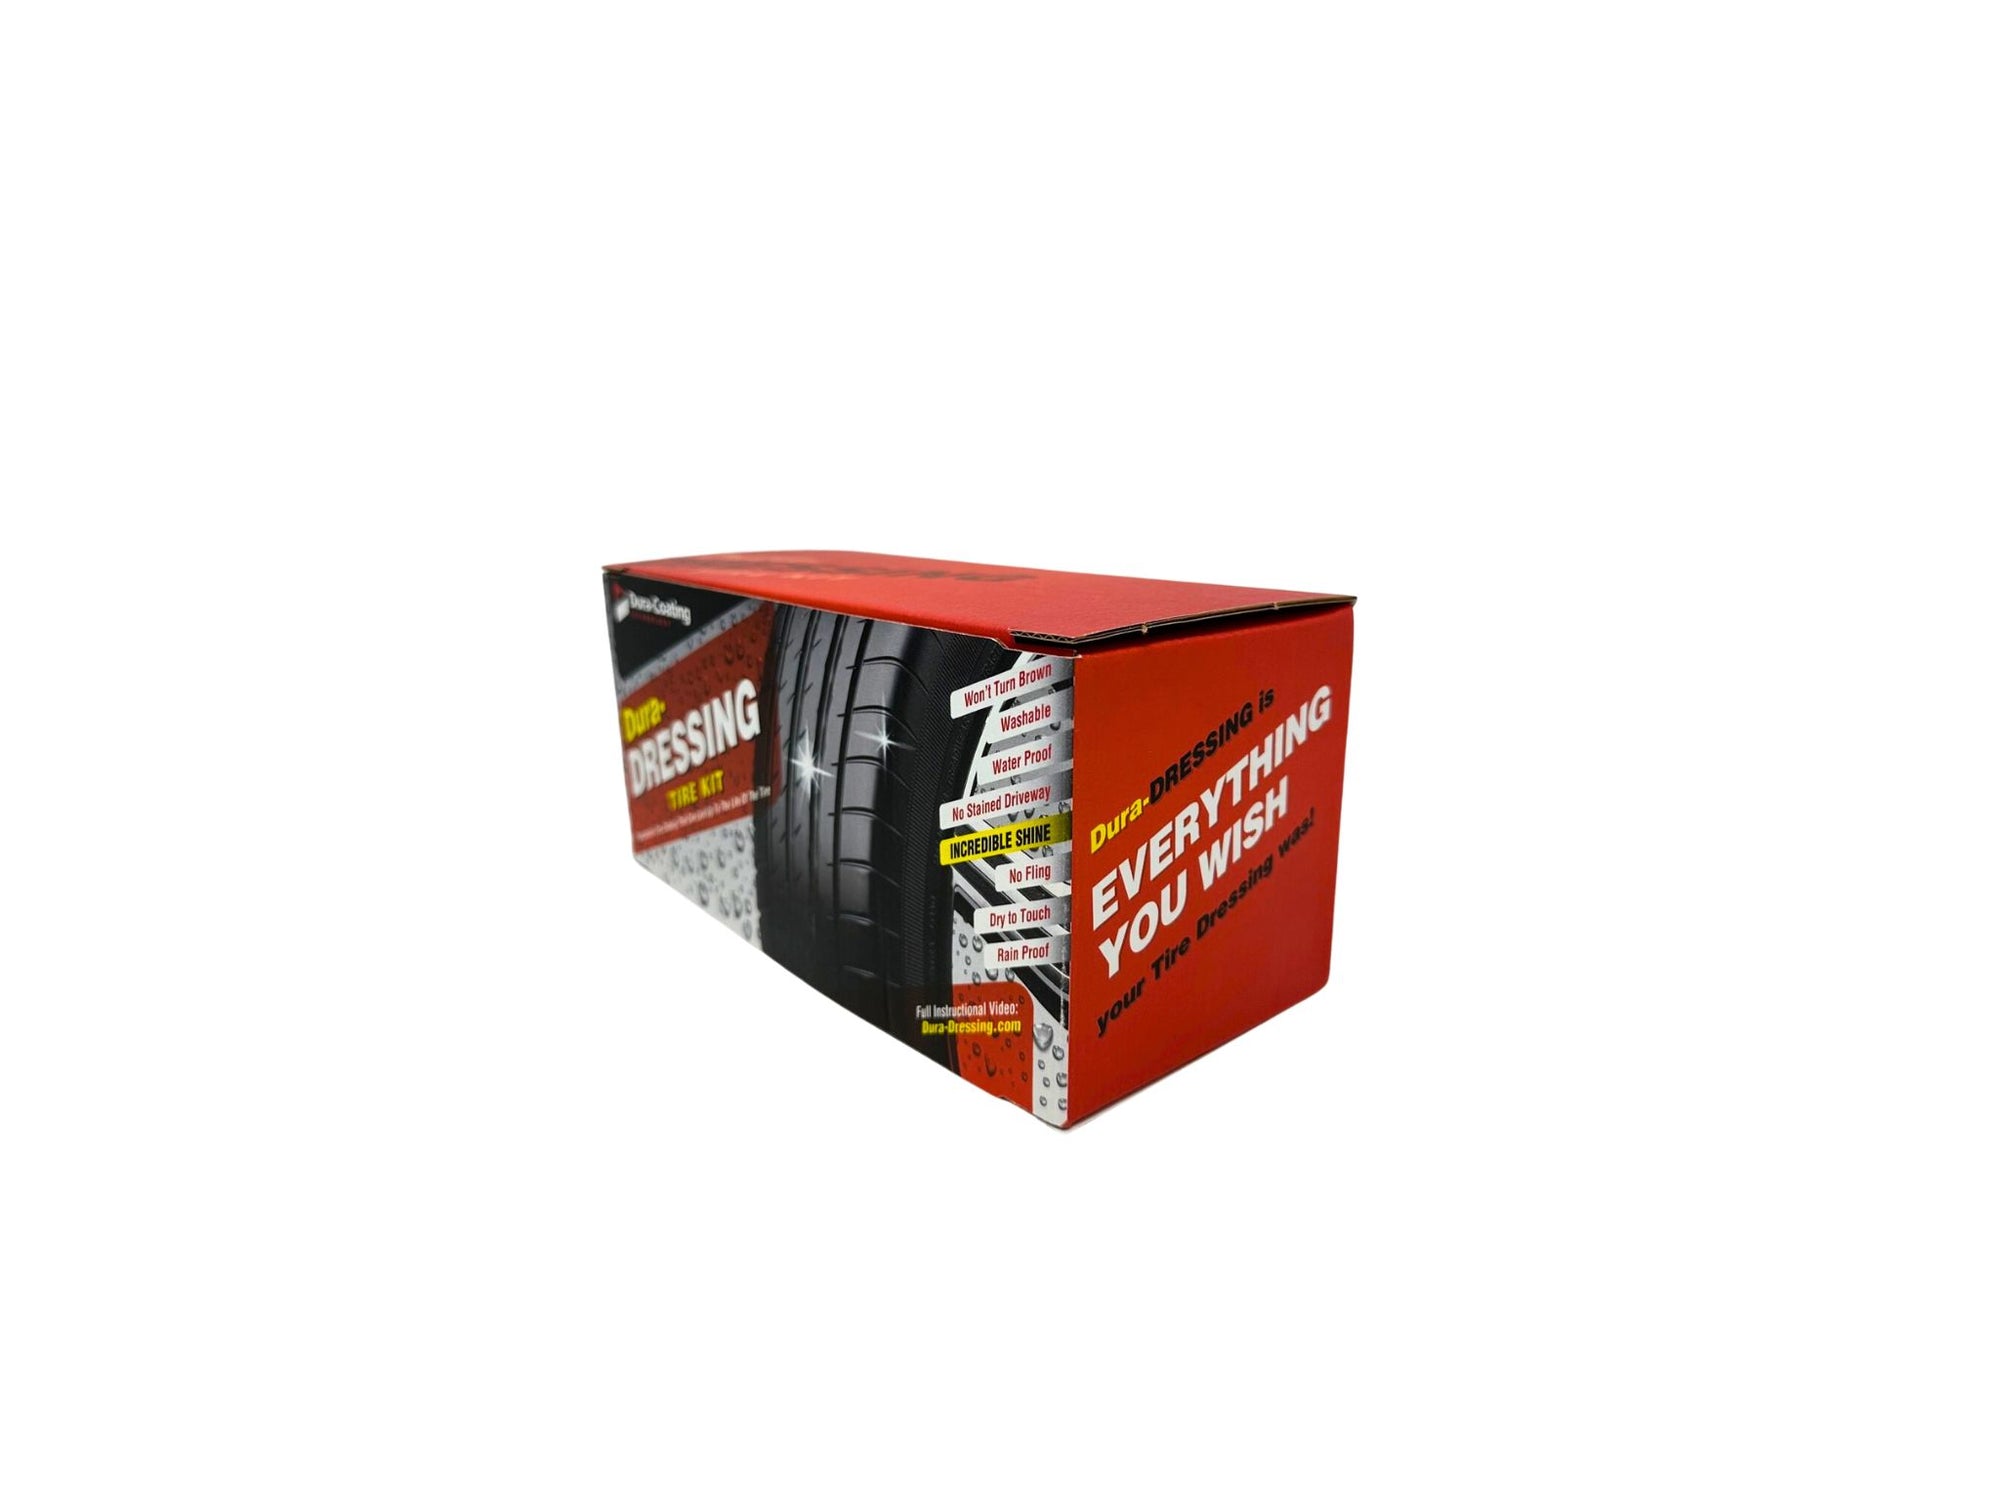  Dura-Dressing Total Tire Kit, XL Kit for 2-3 Car/Truck